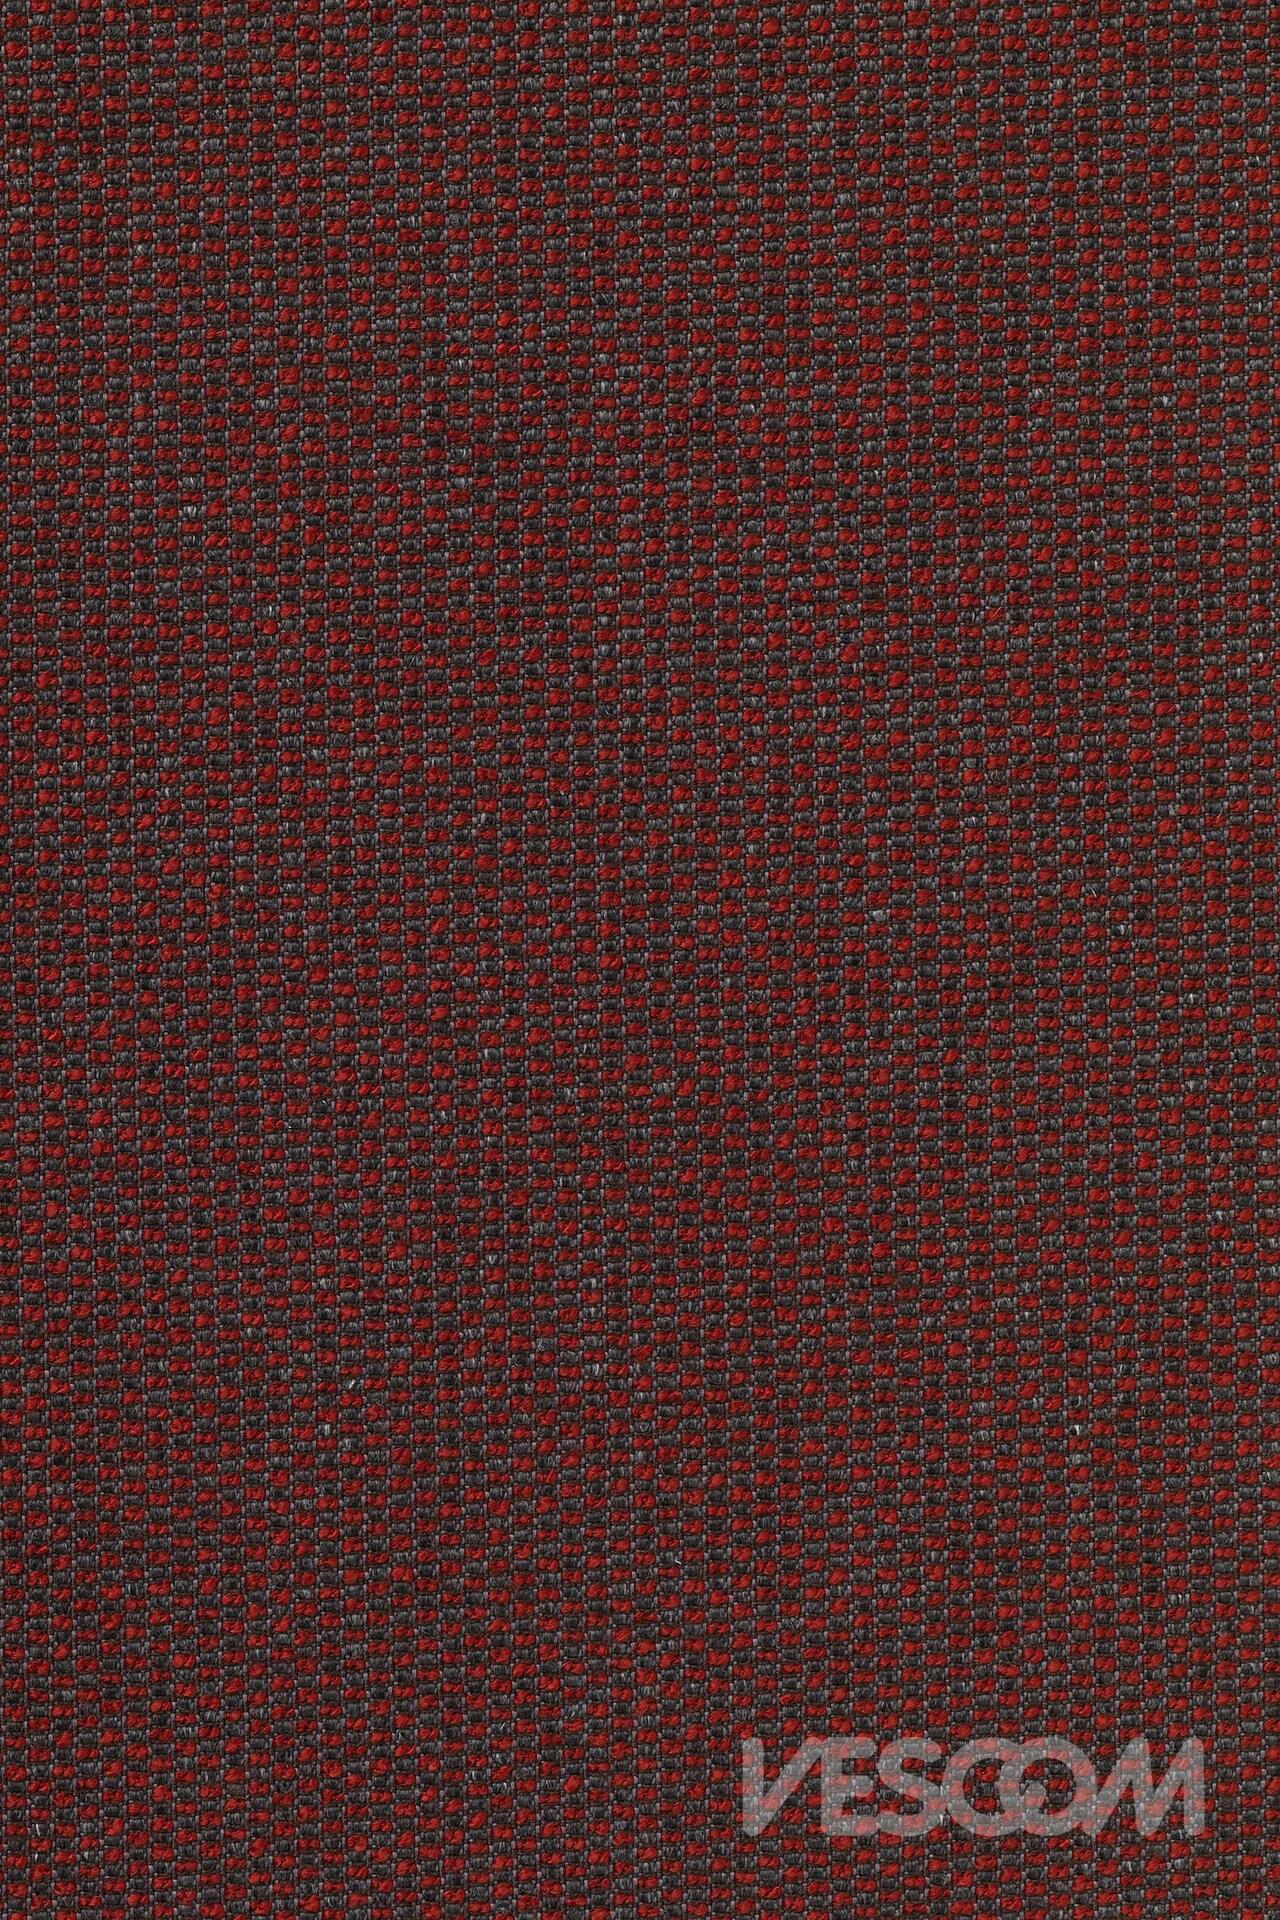 vescom-burton-upholstery-fabric-7056-08